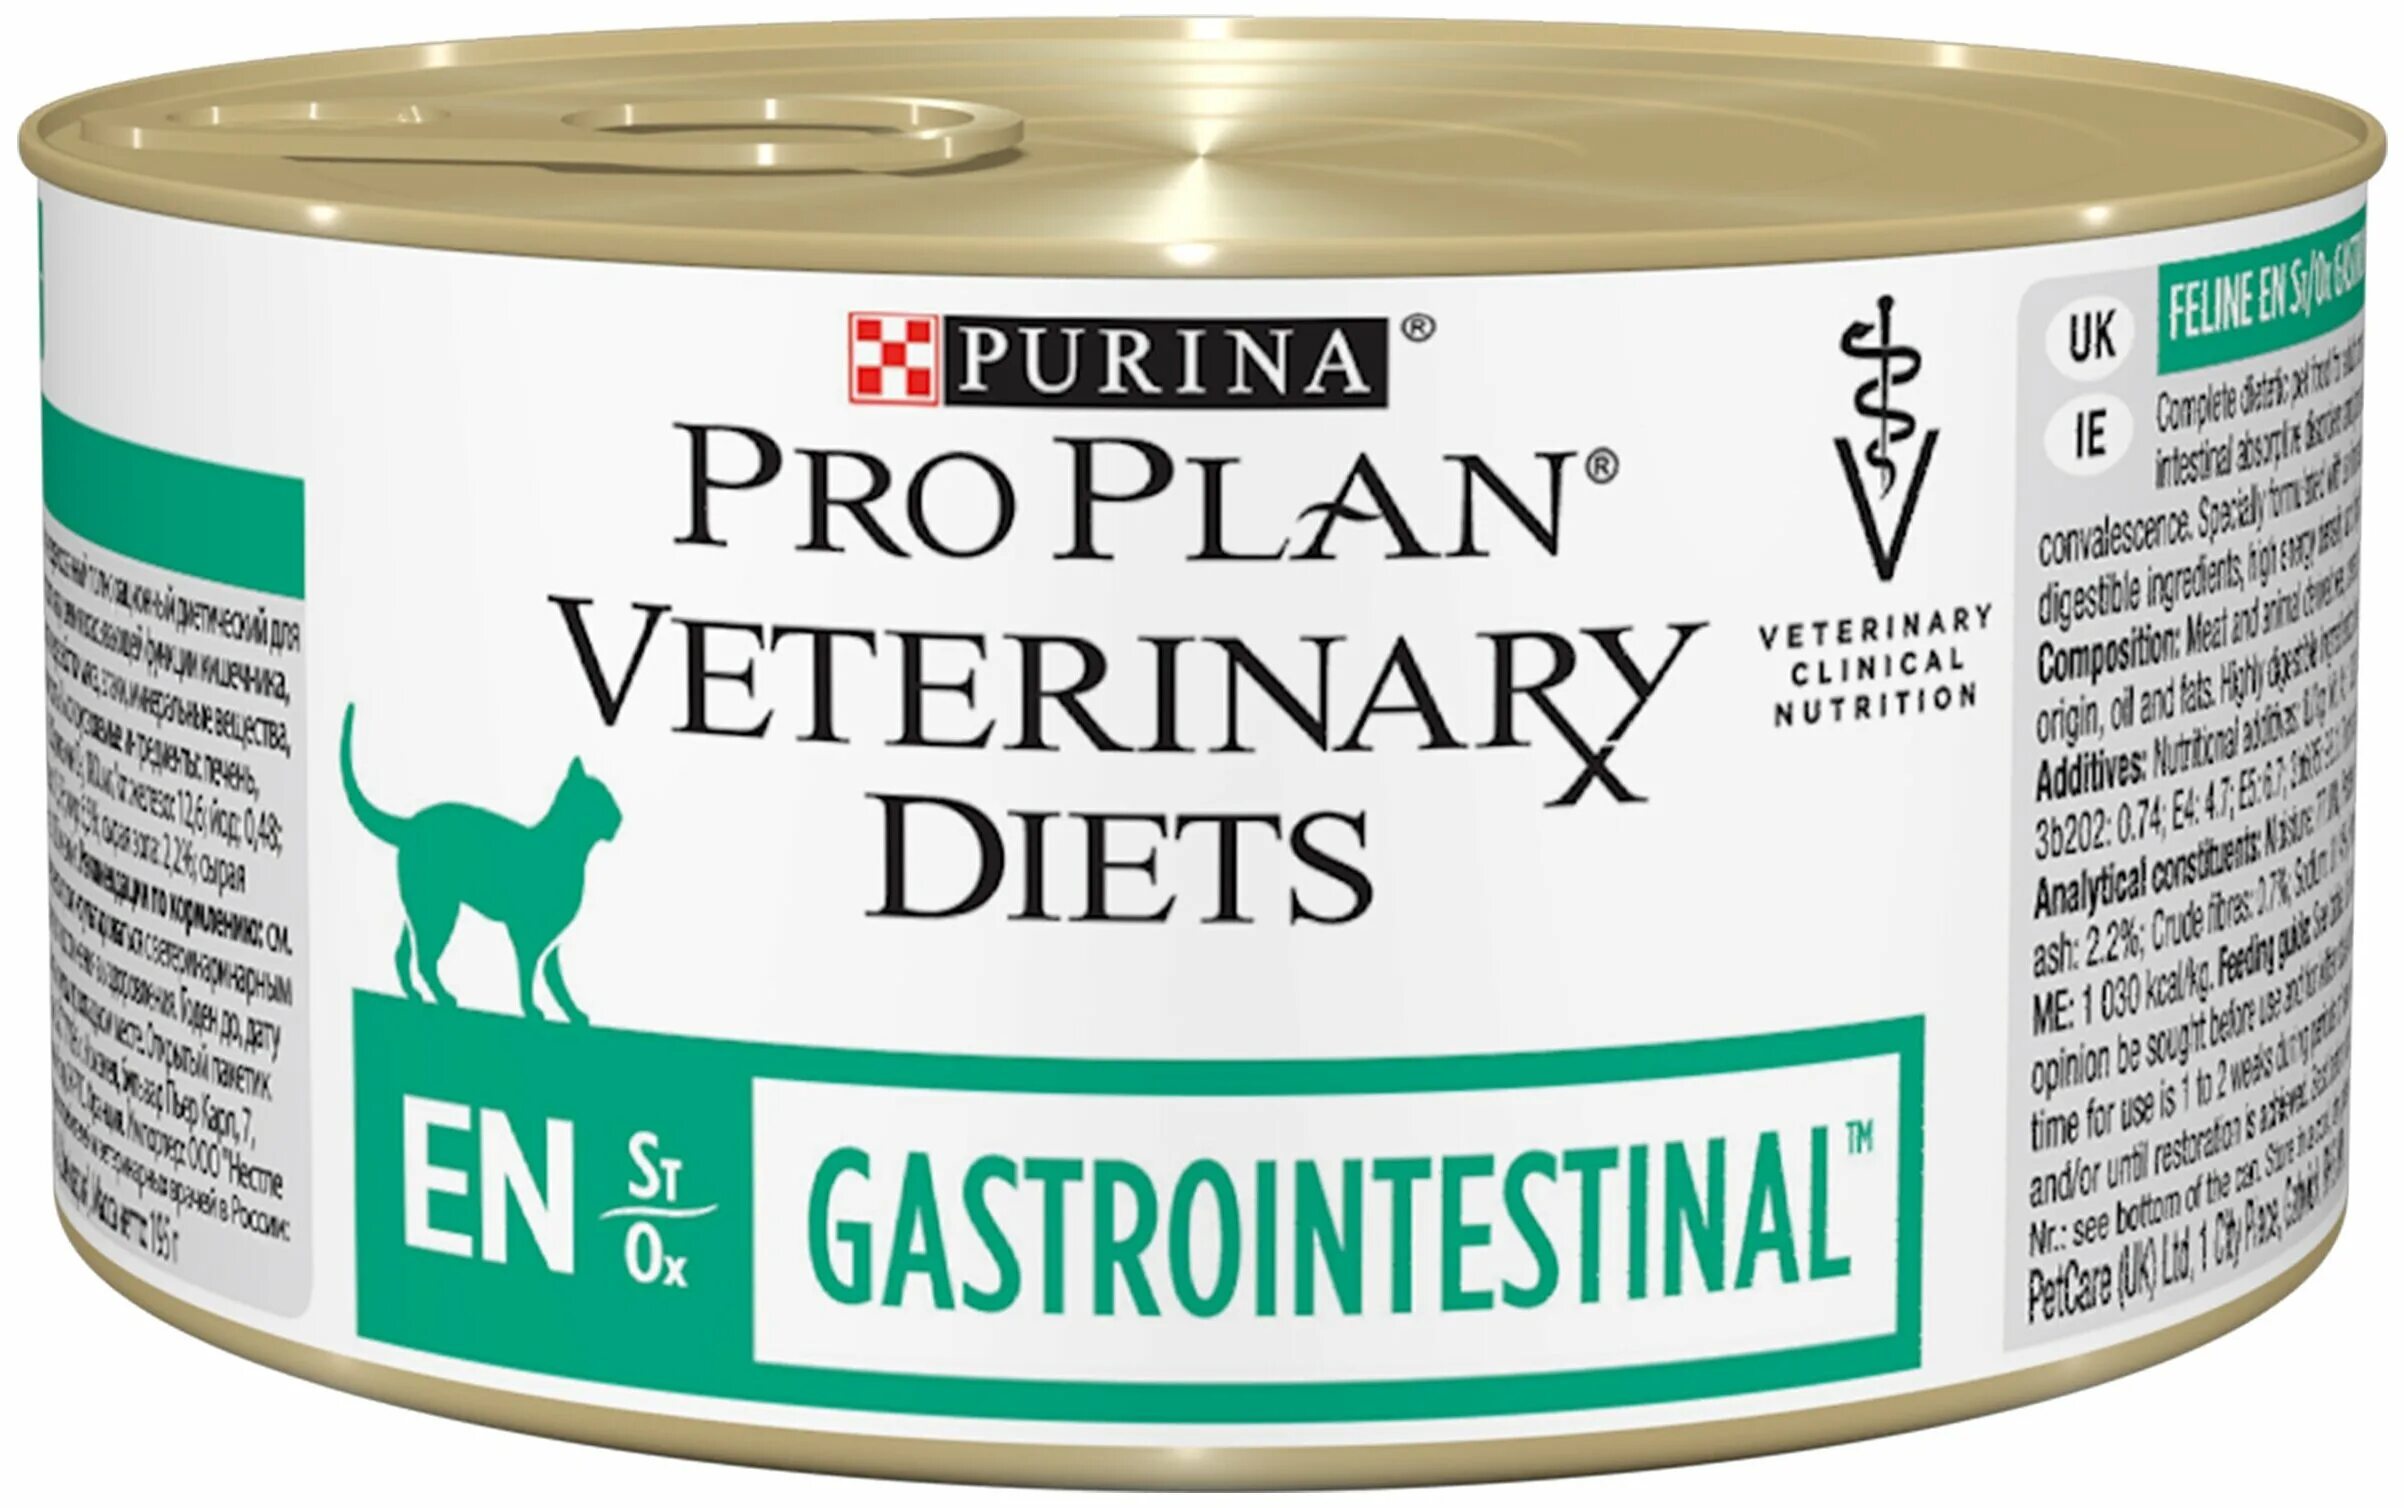 Pro plan veterinary diets nf для кошек